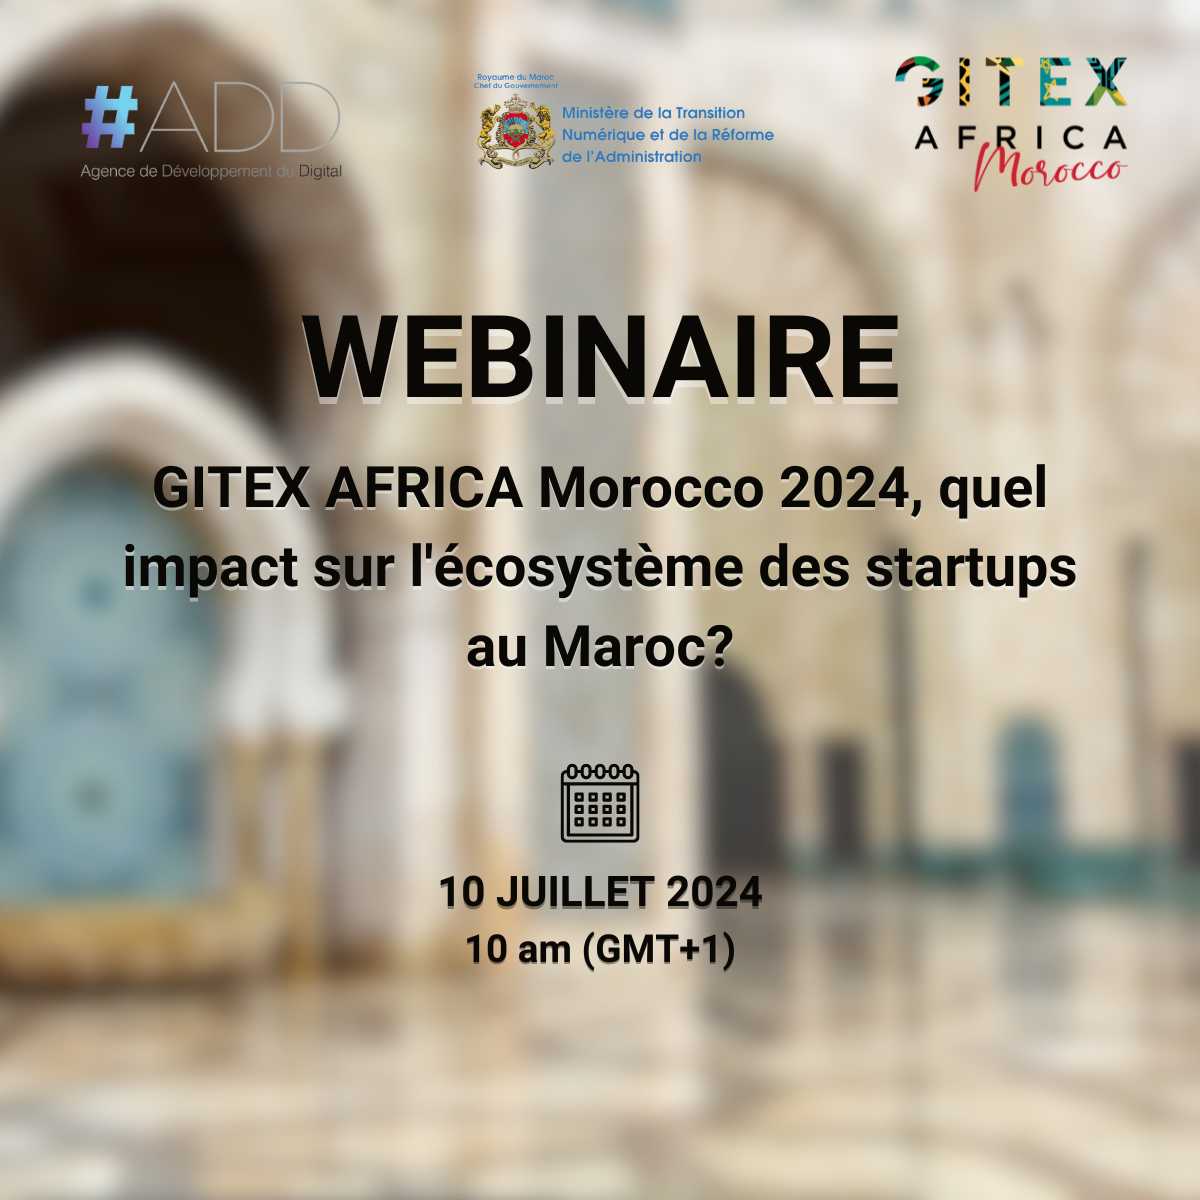 Webinaire : Gitex AFRICA Morocco 2024 | Start-up.ma